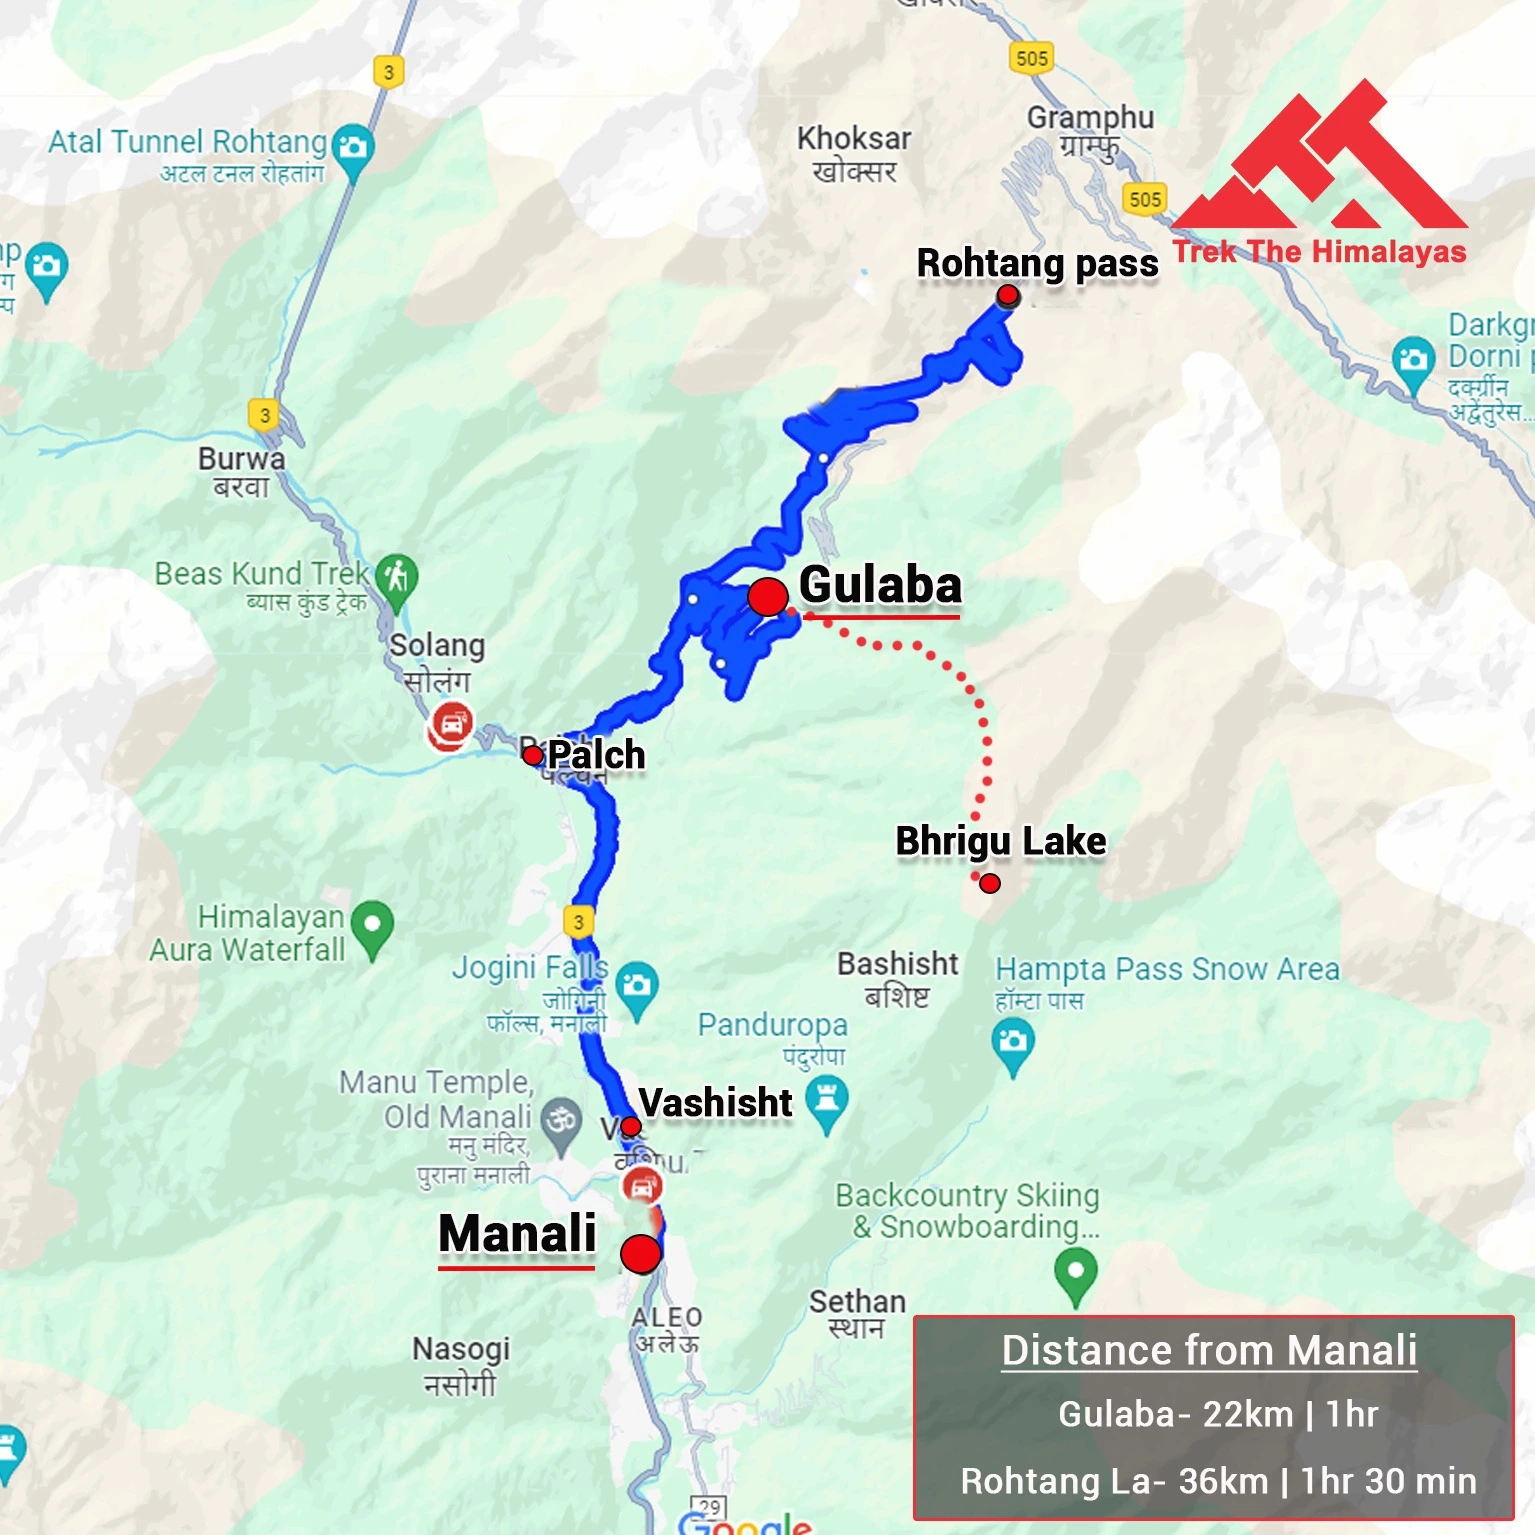 How to Reach Bhrigu Lake Trek Map